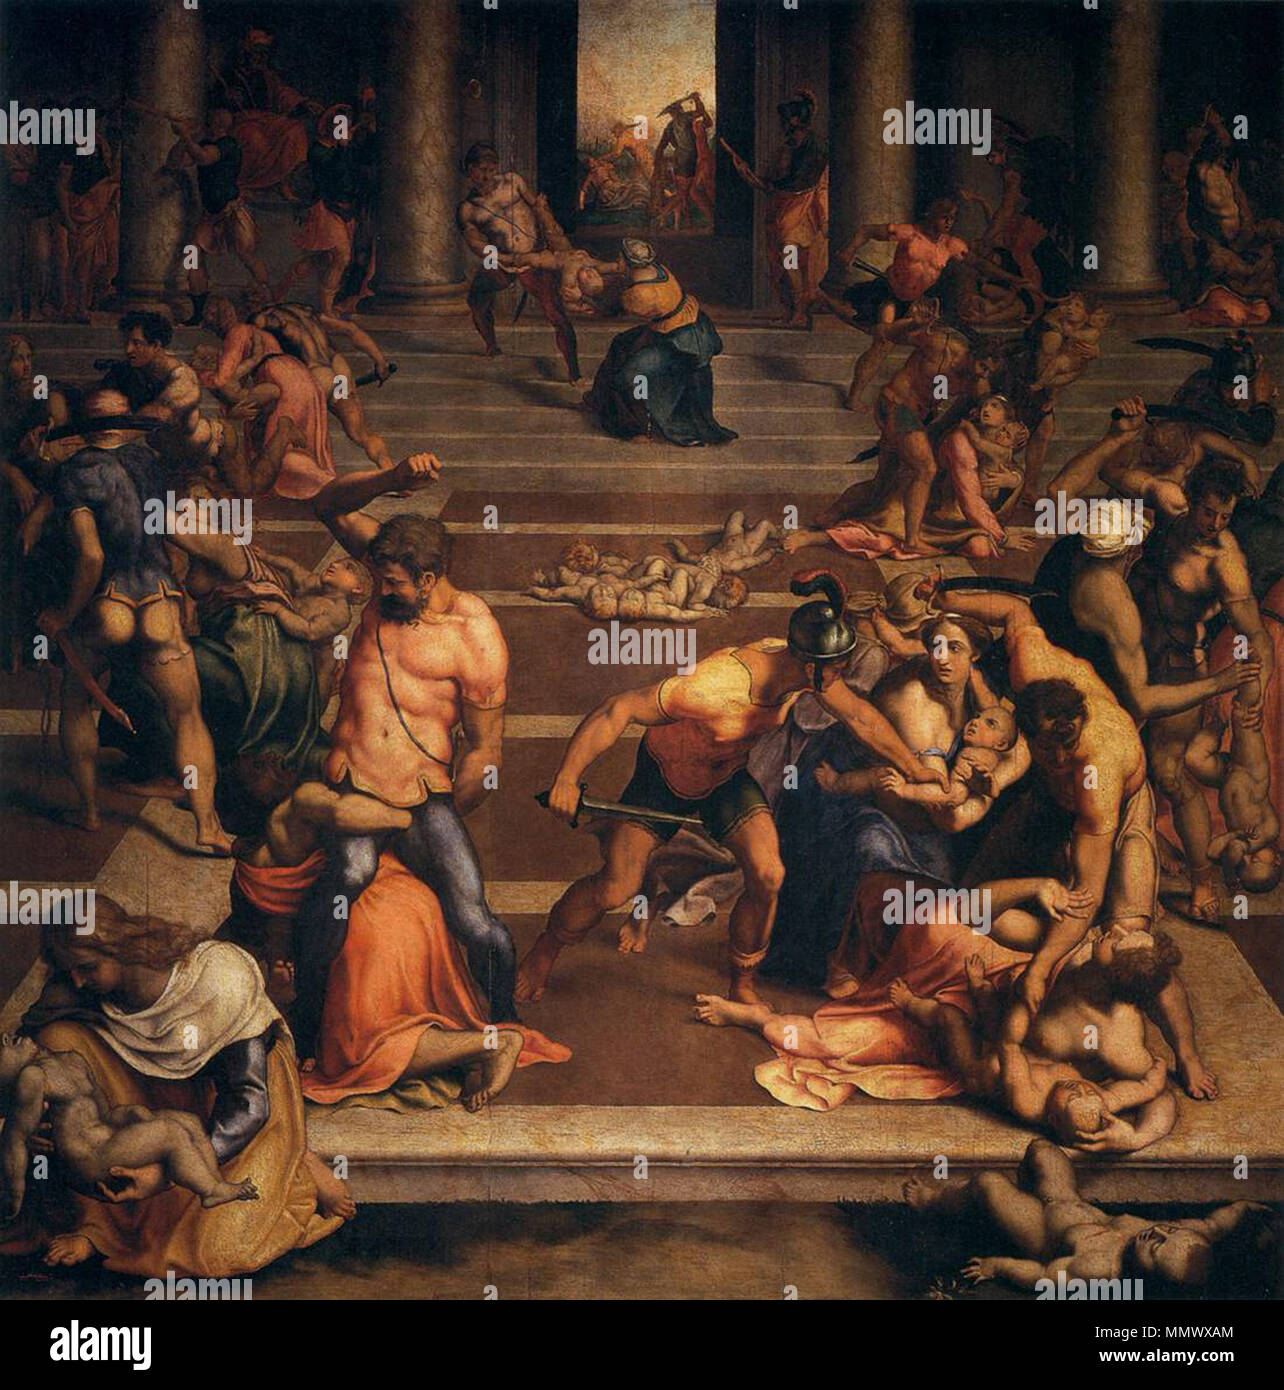 The Massacre of the Innocents. 1557. Daniele da Volterra - The Massacre of the Innocents - WGA05910 Stock Photo